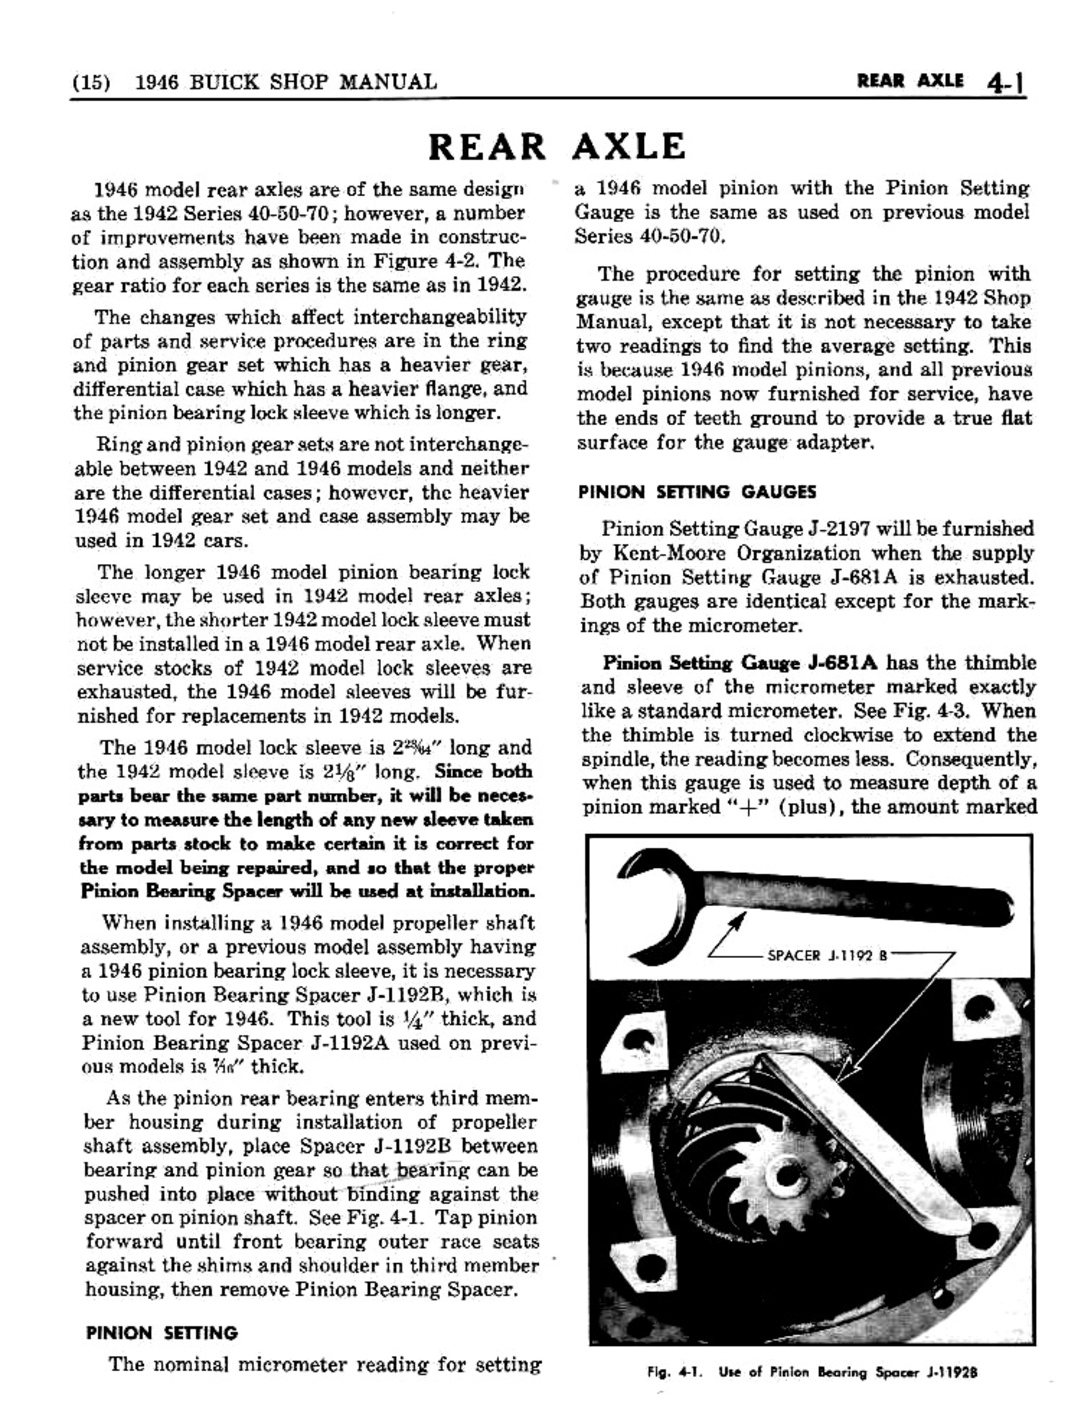 n_05 1946 Buick Shop Manual - Rear Axle-001-001.jpg